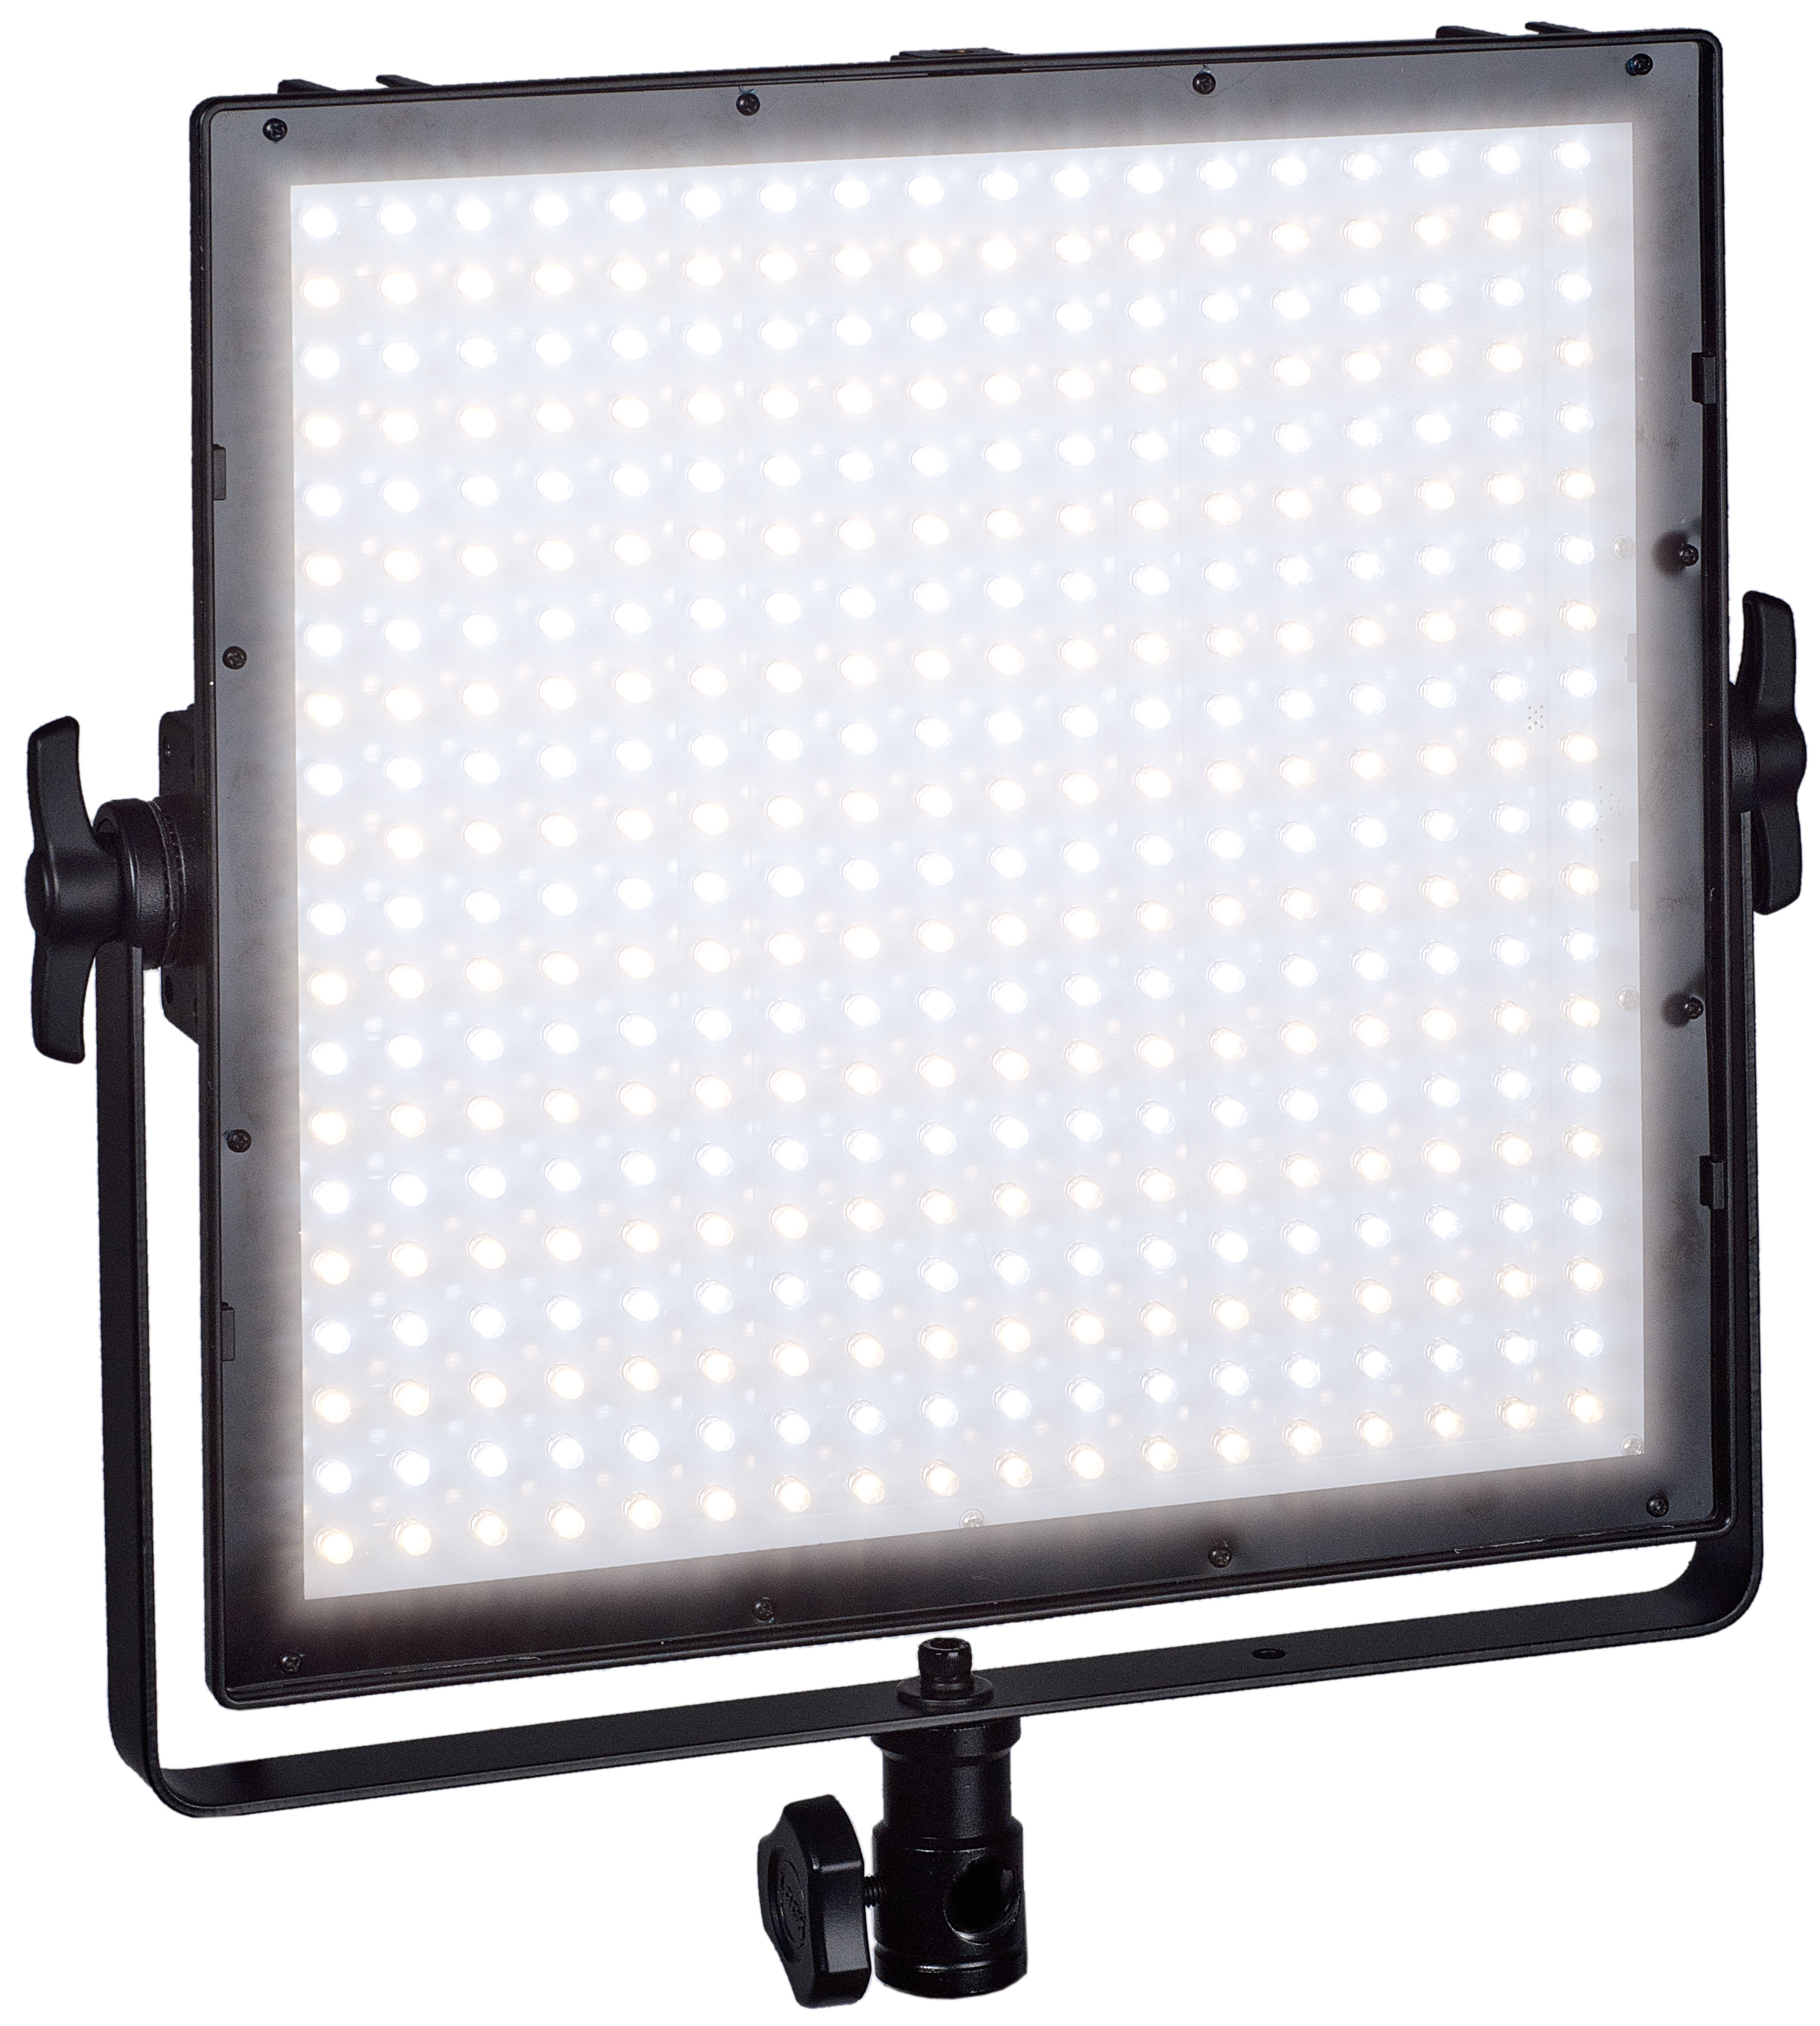 KAISER LED-Flächenleuchte PL 360 Vario,  26x26cm Leuchtfläche, 360 LEDs, dimmbar